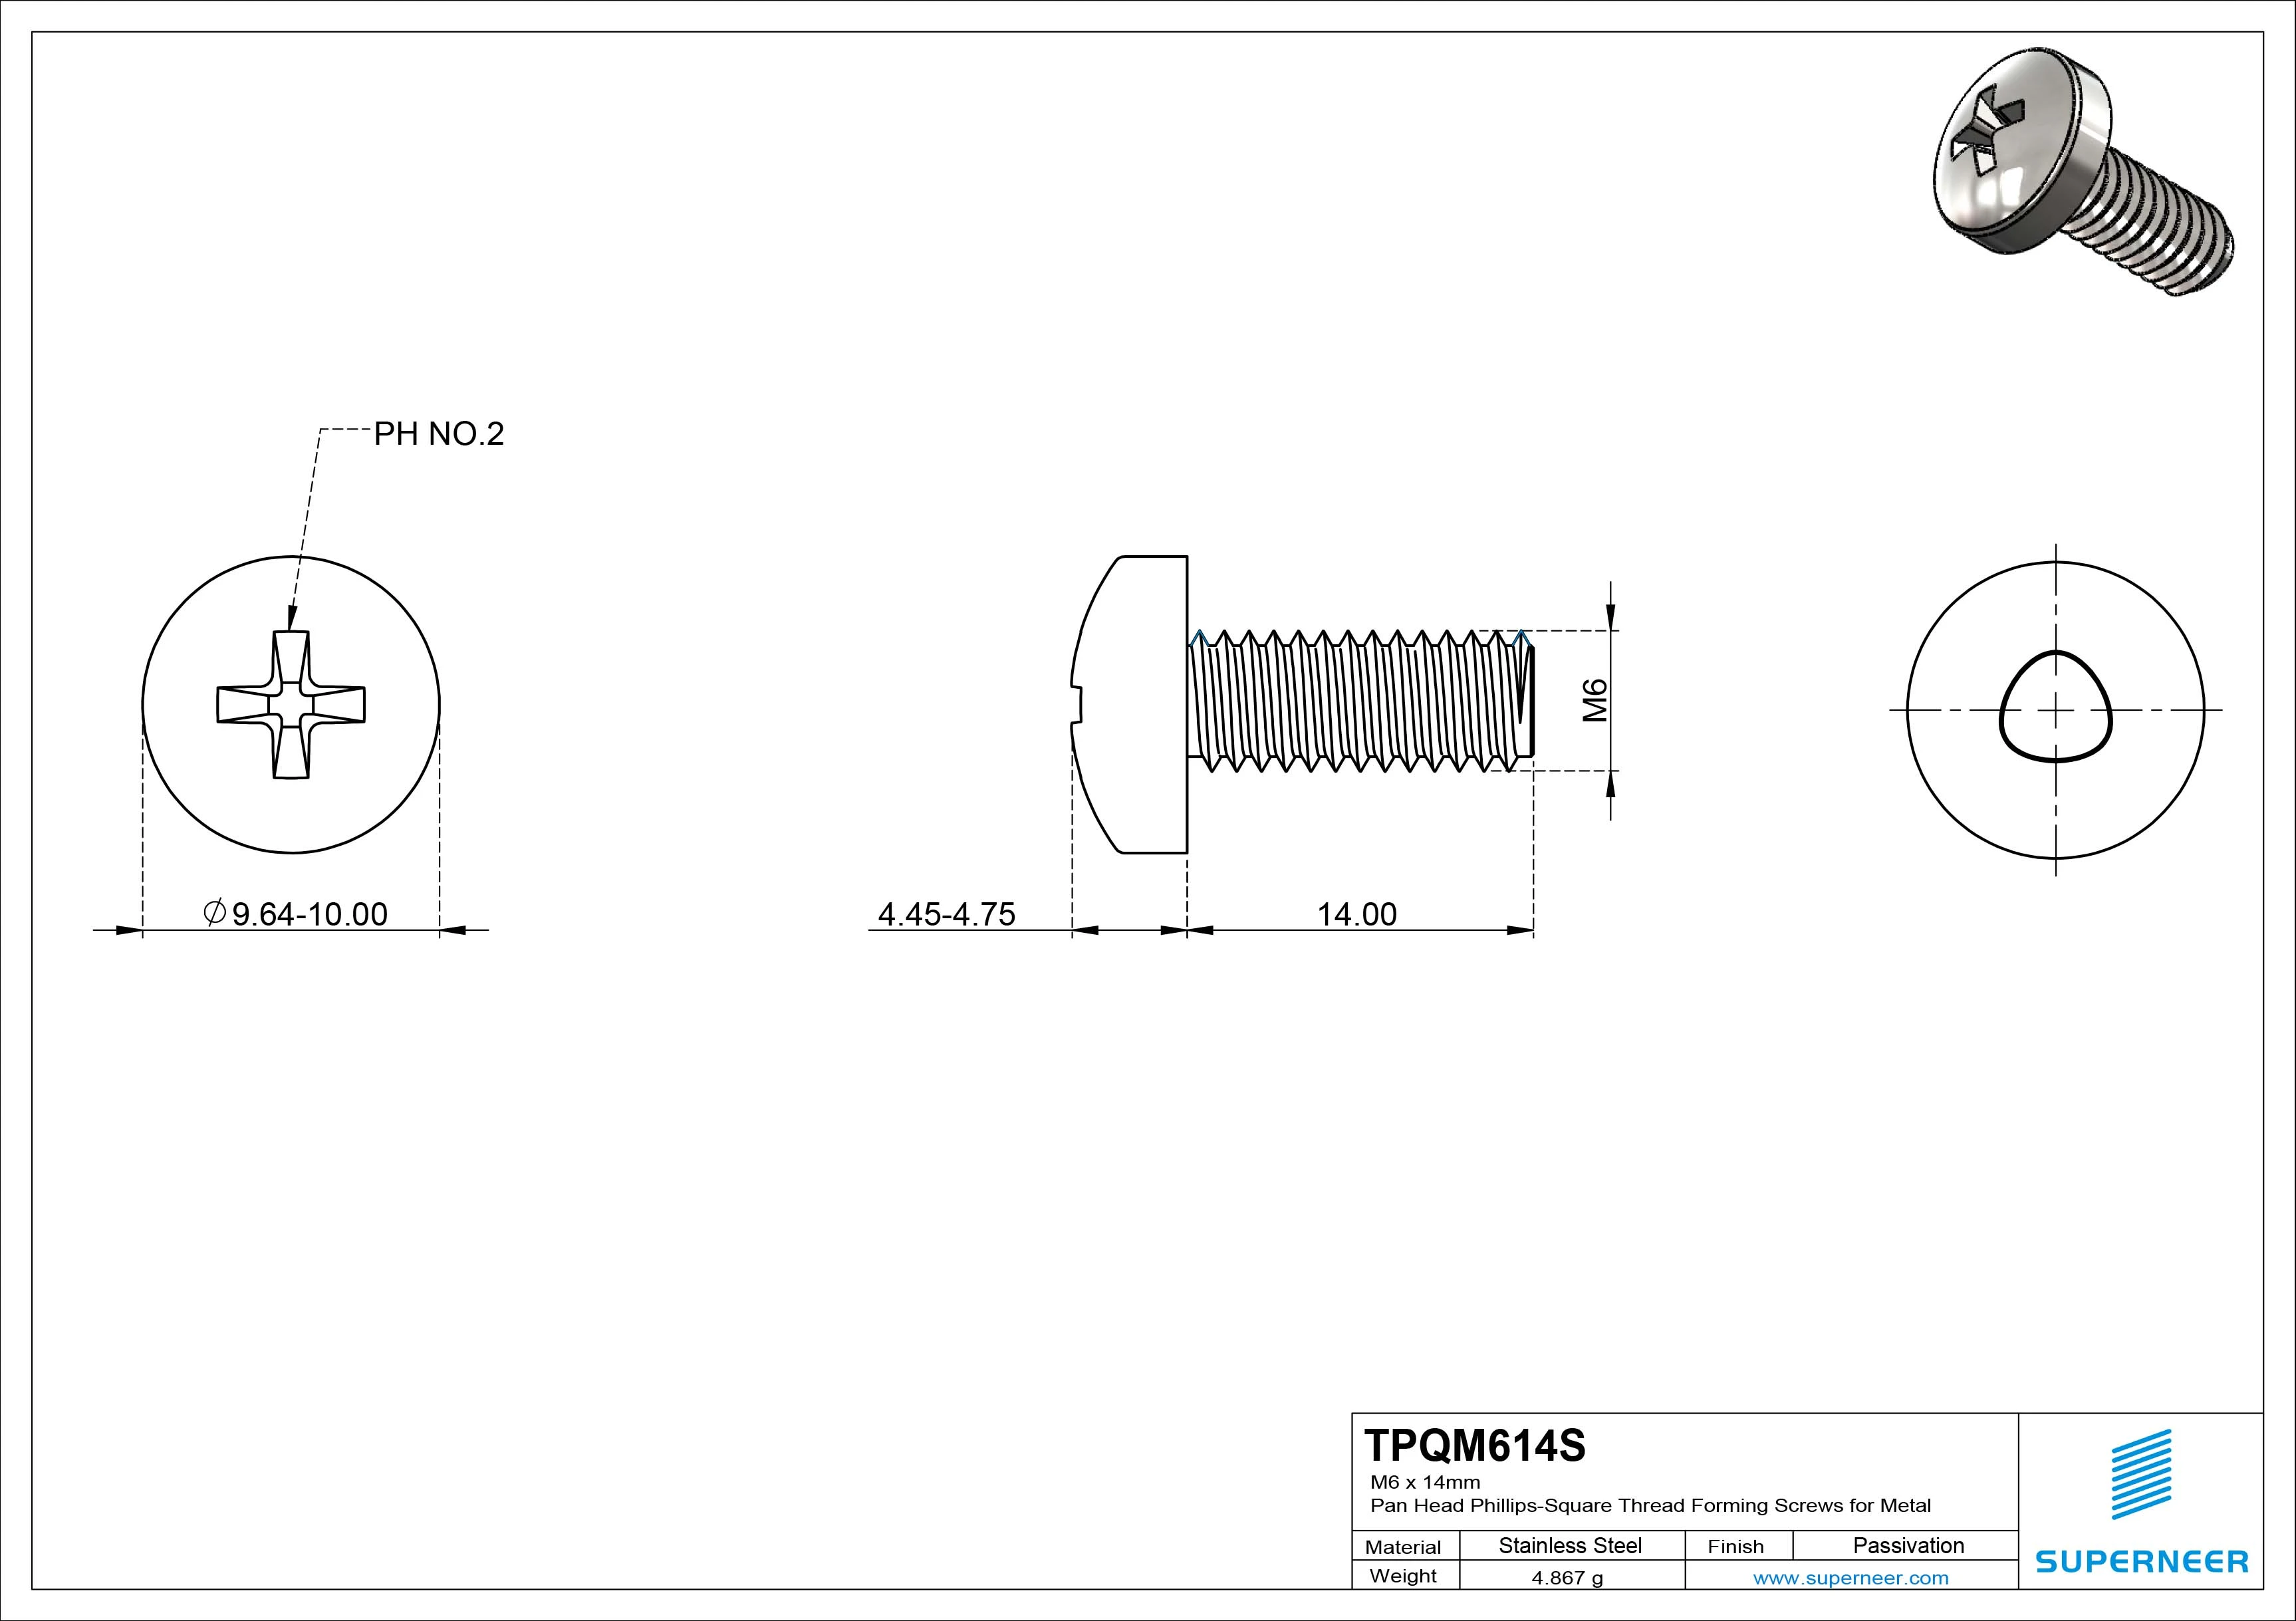 M6 × 14mm Pan Head Phillips-Square Thread Forming Screws for Metal SUS304 Stainless Steel Inox